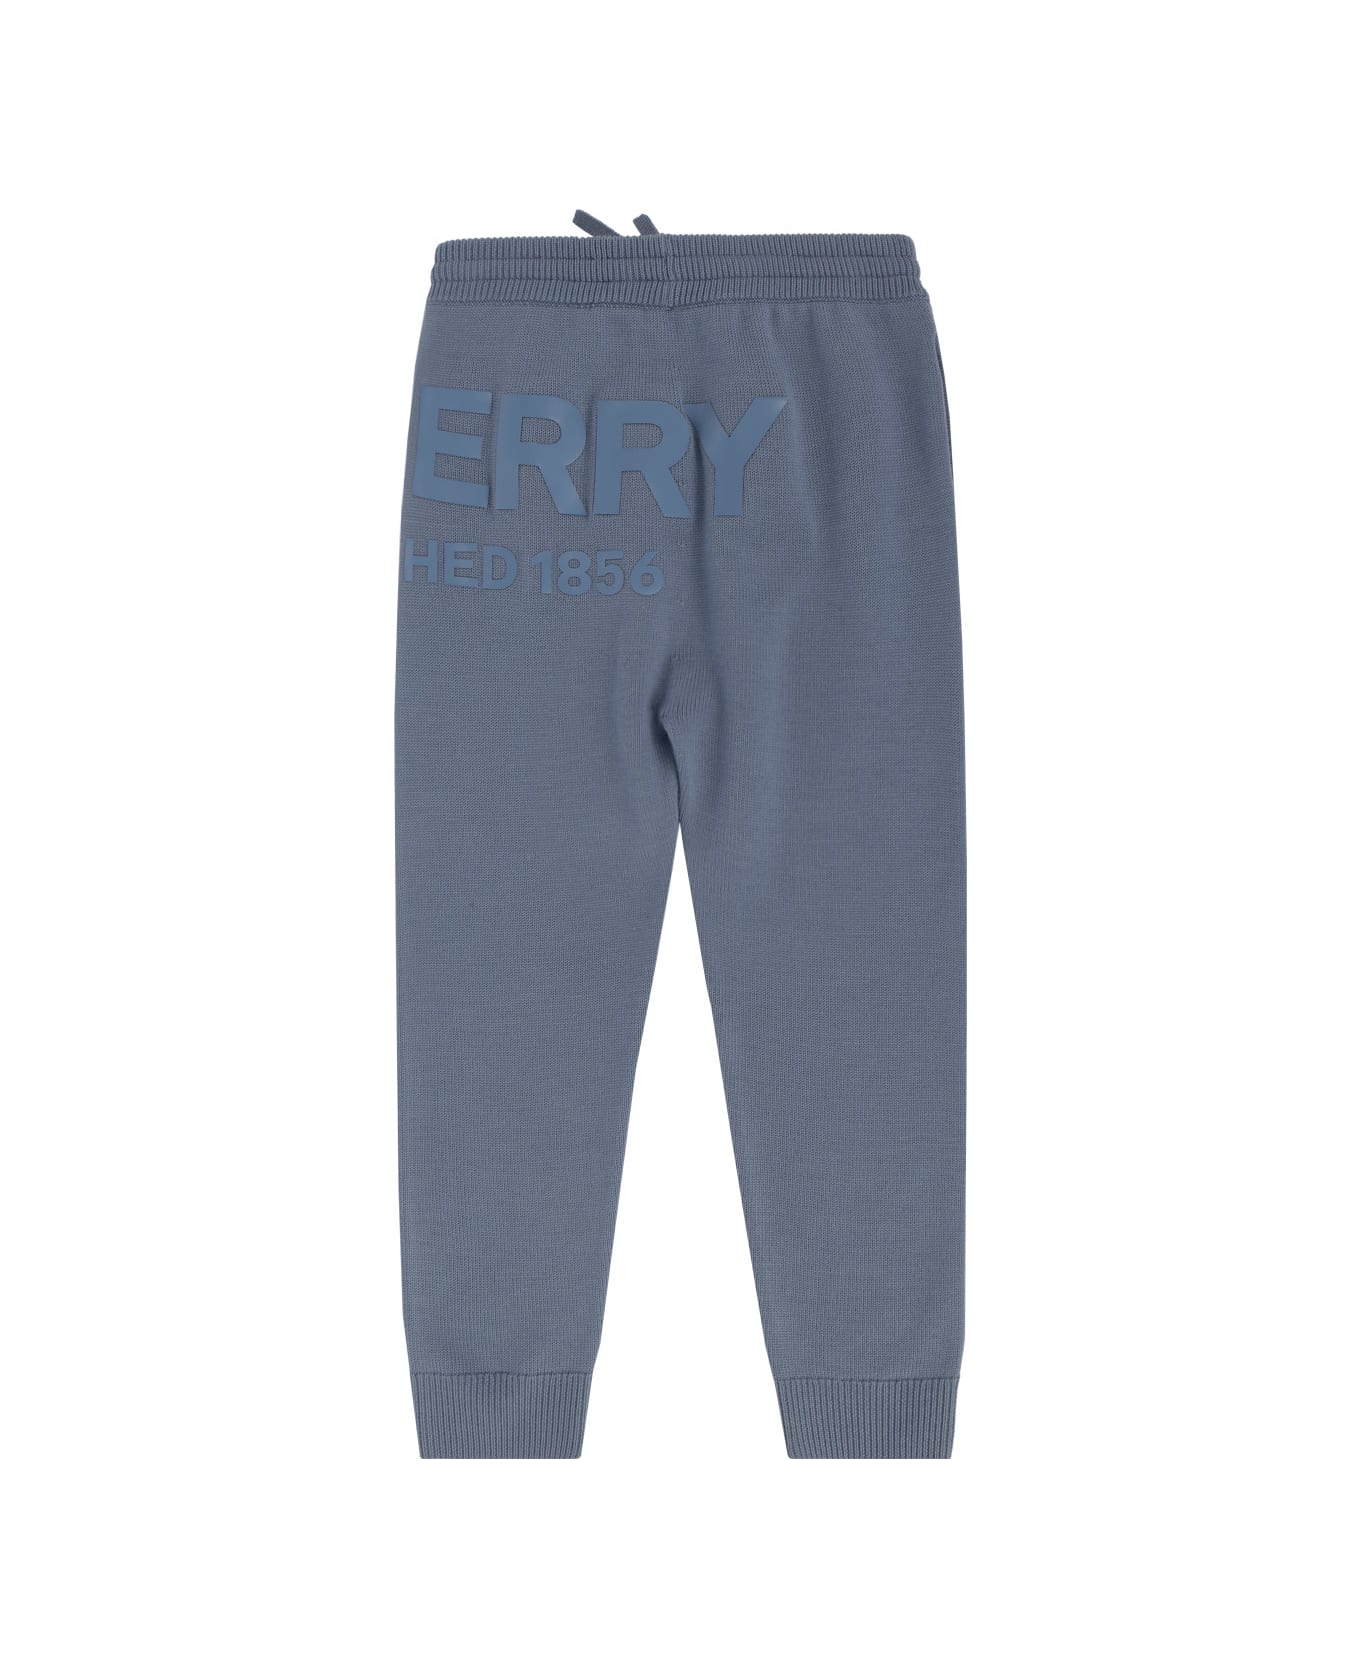 Burberry Clarise Pants For Boys - Shale Blue